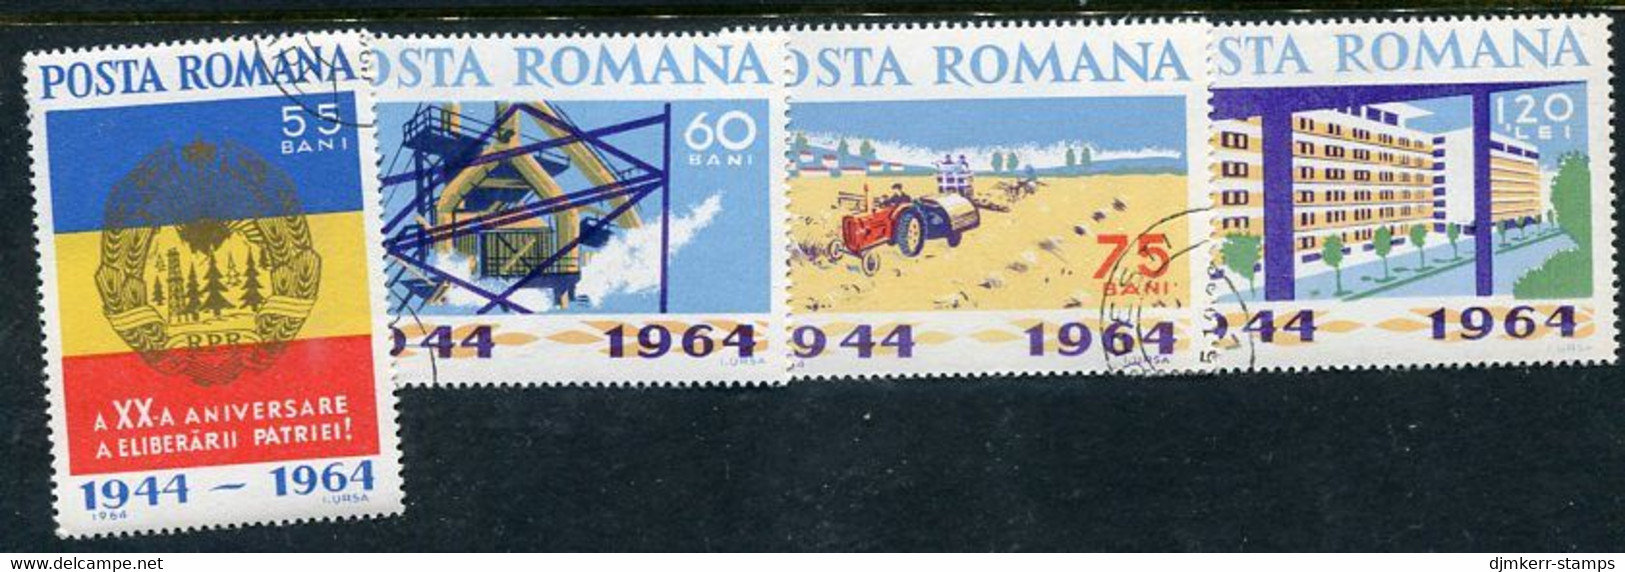 ROMANIA 1964 Overthrow Of Fascist Regime Used.  Michel 2305-08 - Usado